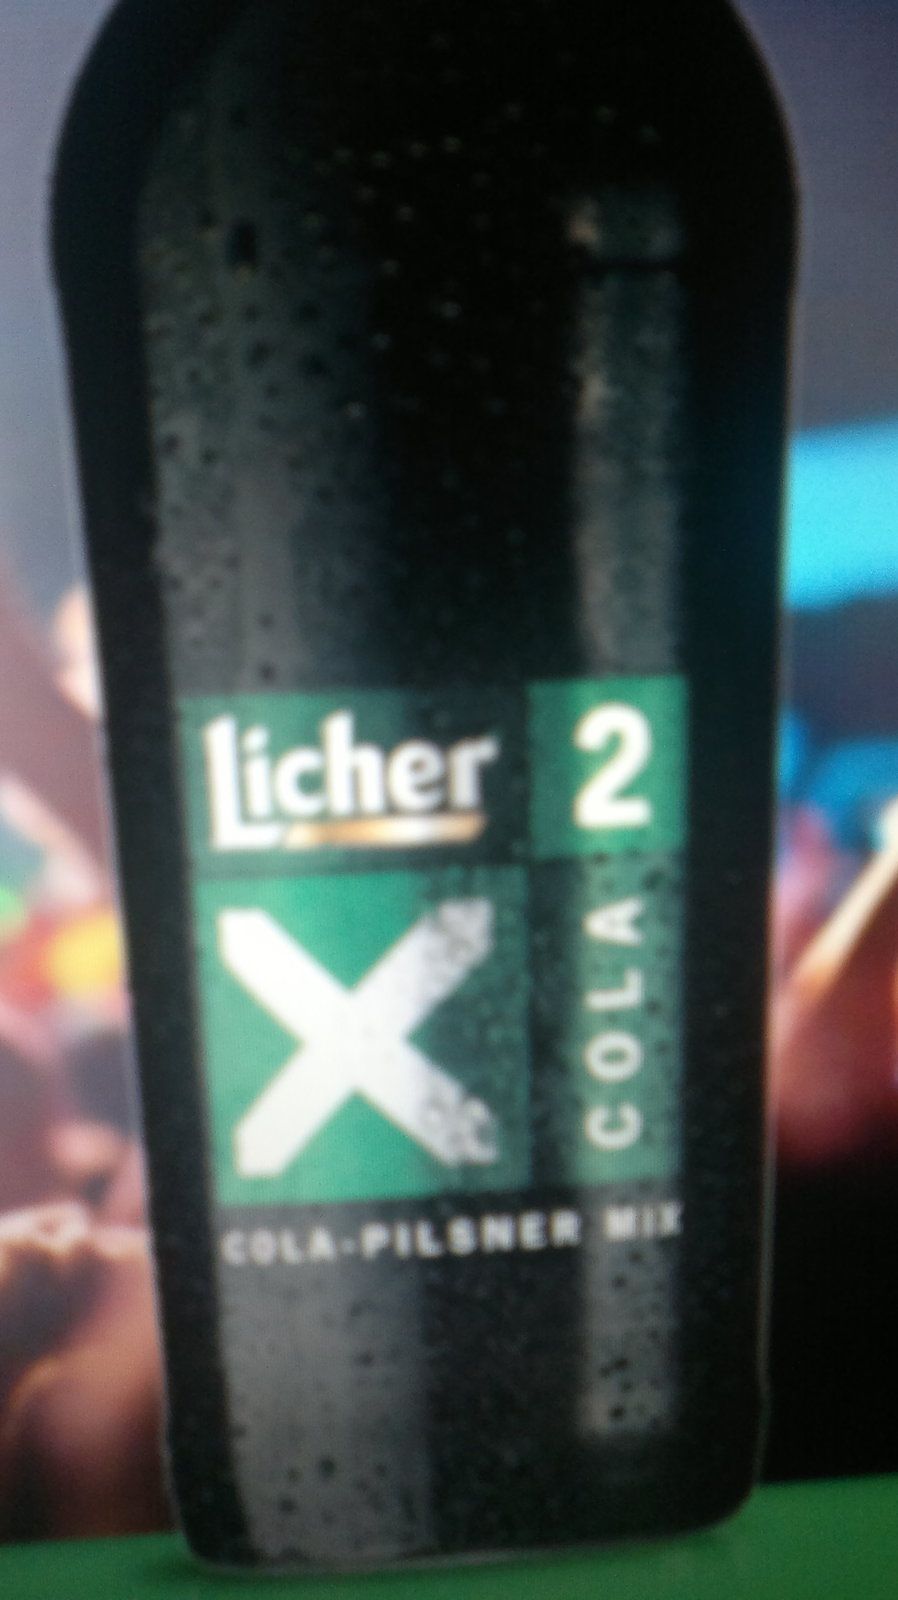 Licher Pilsner Premium - auxmillebieres.over-blog.com